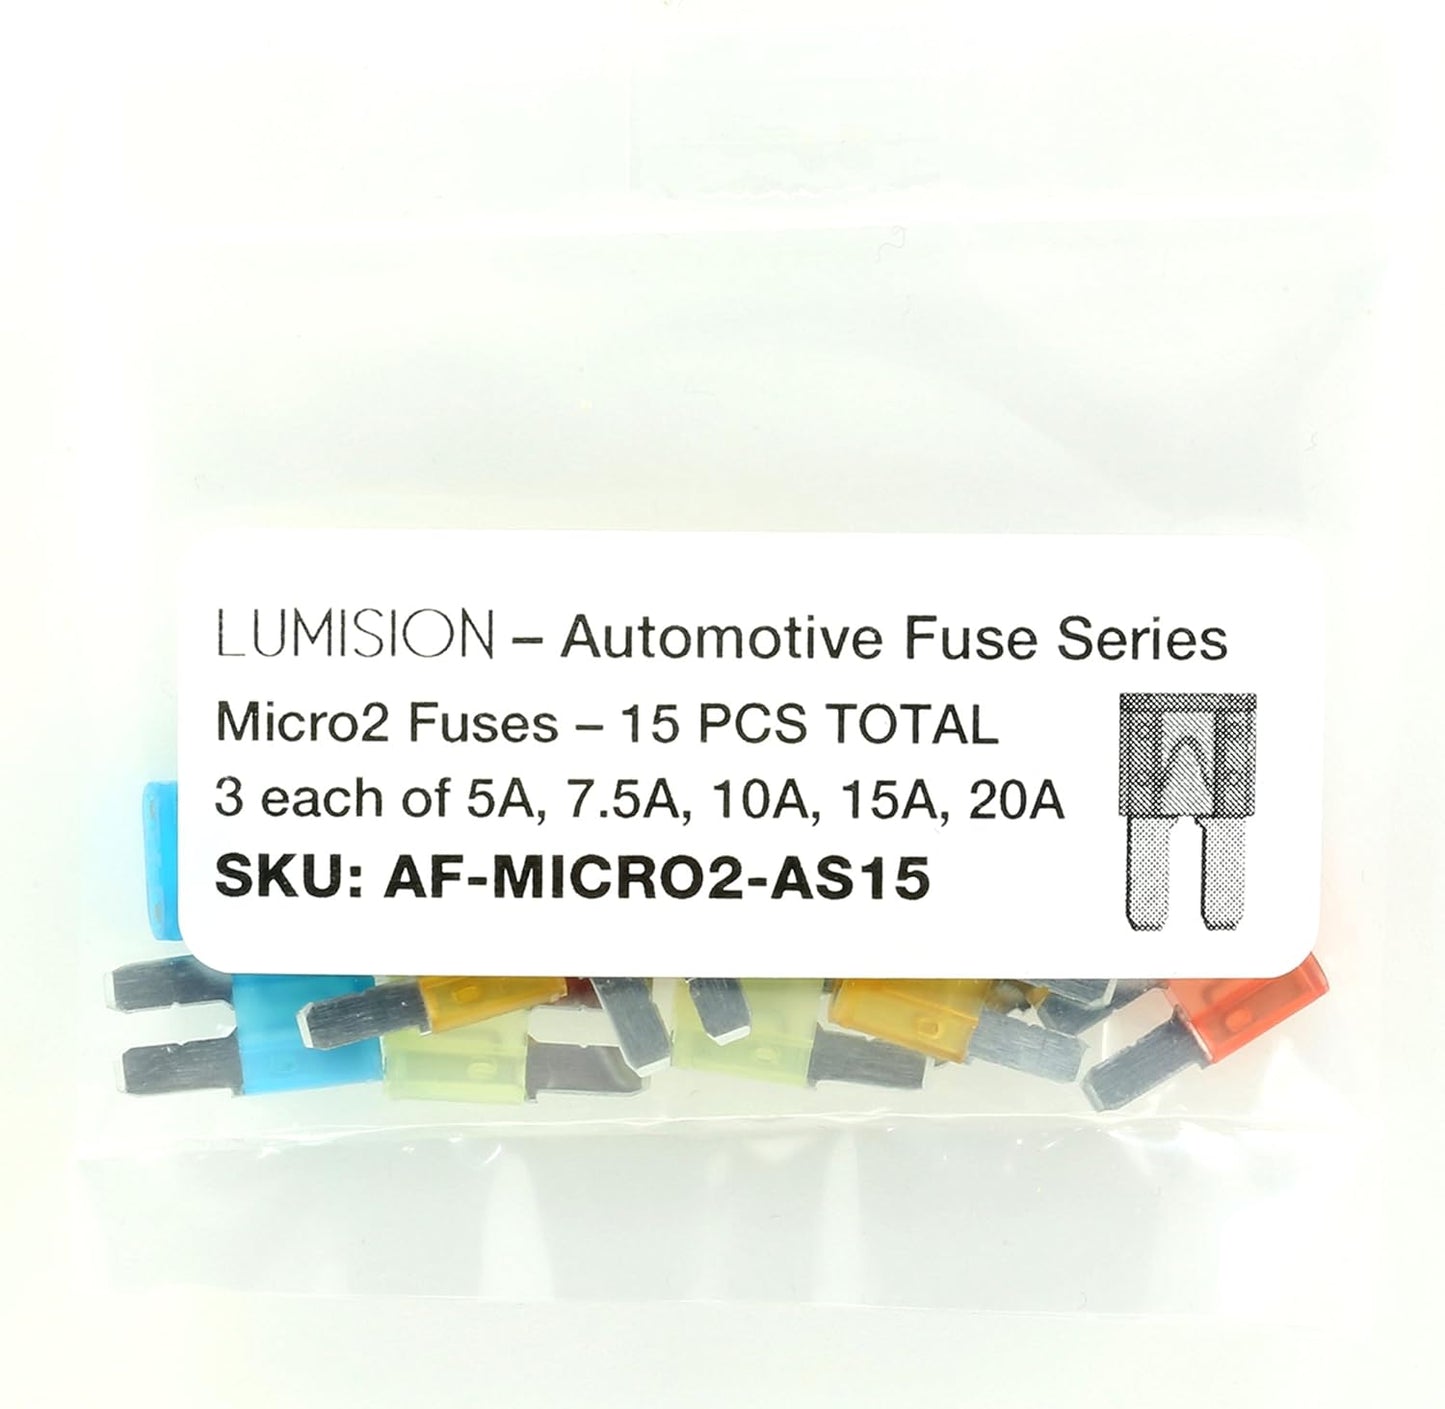 Lumision Automotive Micro2 ATR APT Fuses Assorted 15 pcs Lumision 5A, 7.5A, 10A, 15A, 20A - 15 Fuses